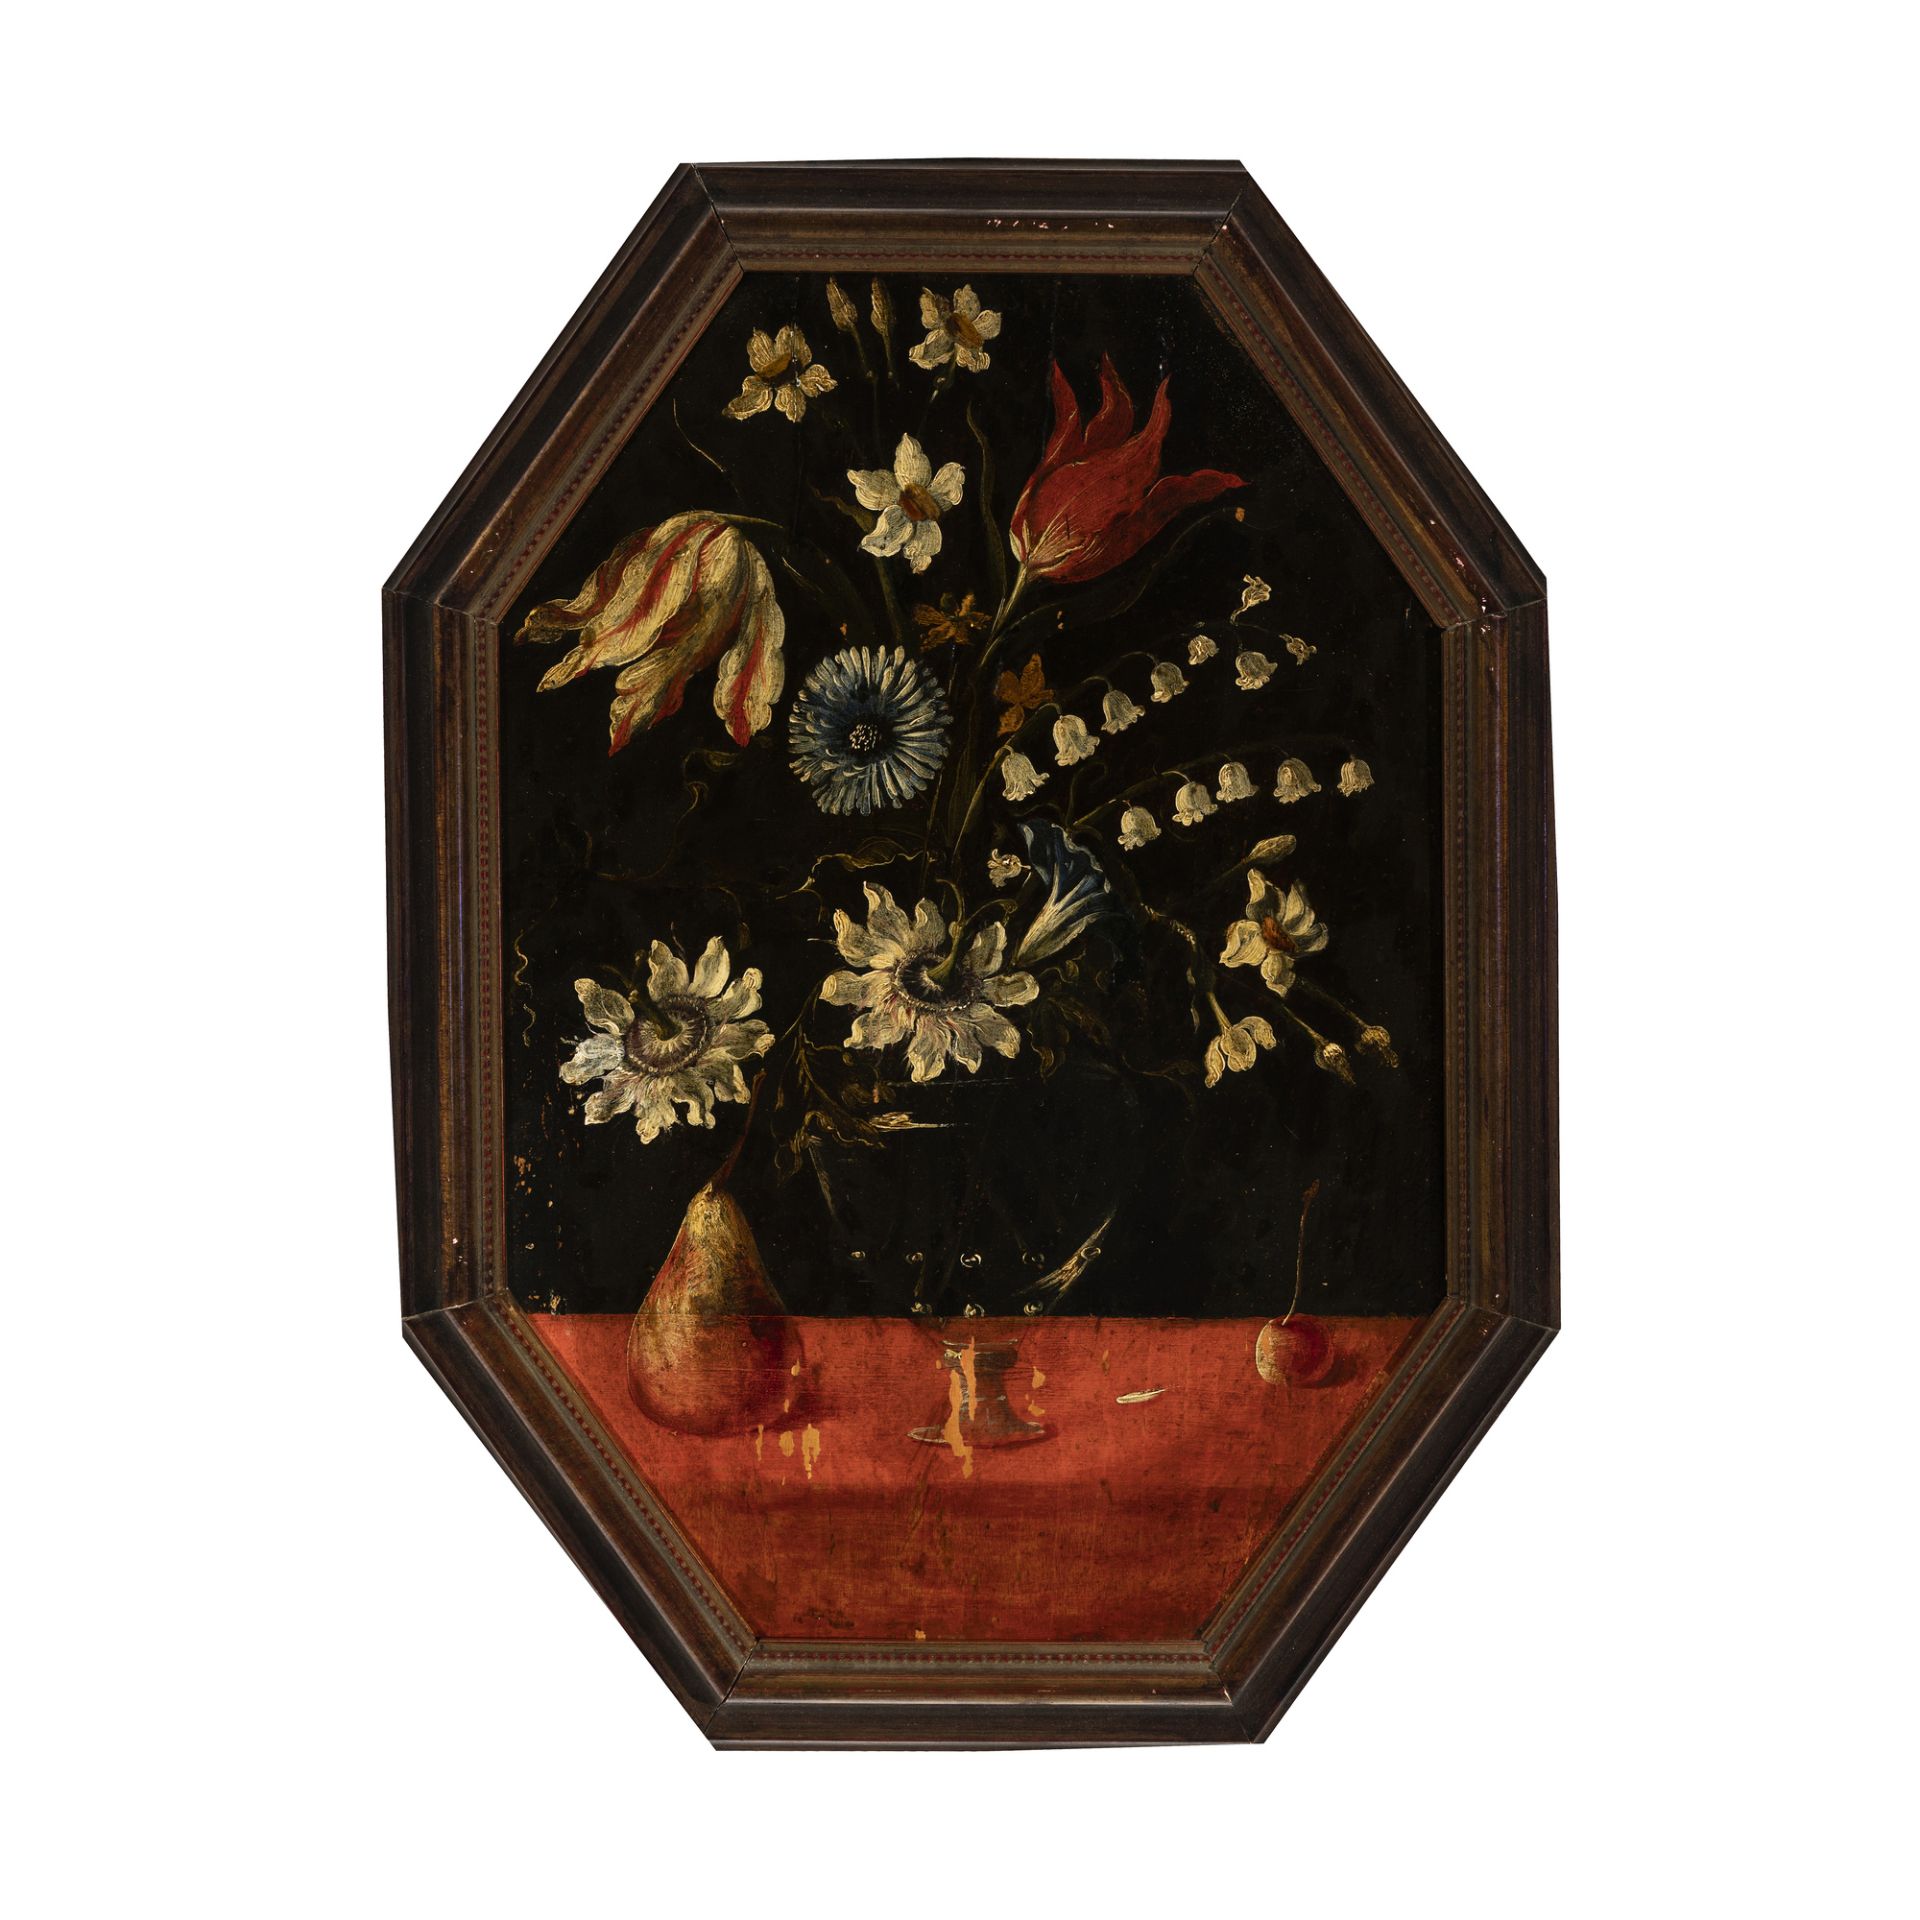 Orsola Maddalena Caccia (Moncalvo 1596 - 1676) attribuito - Image 2 of 5